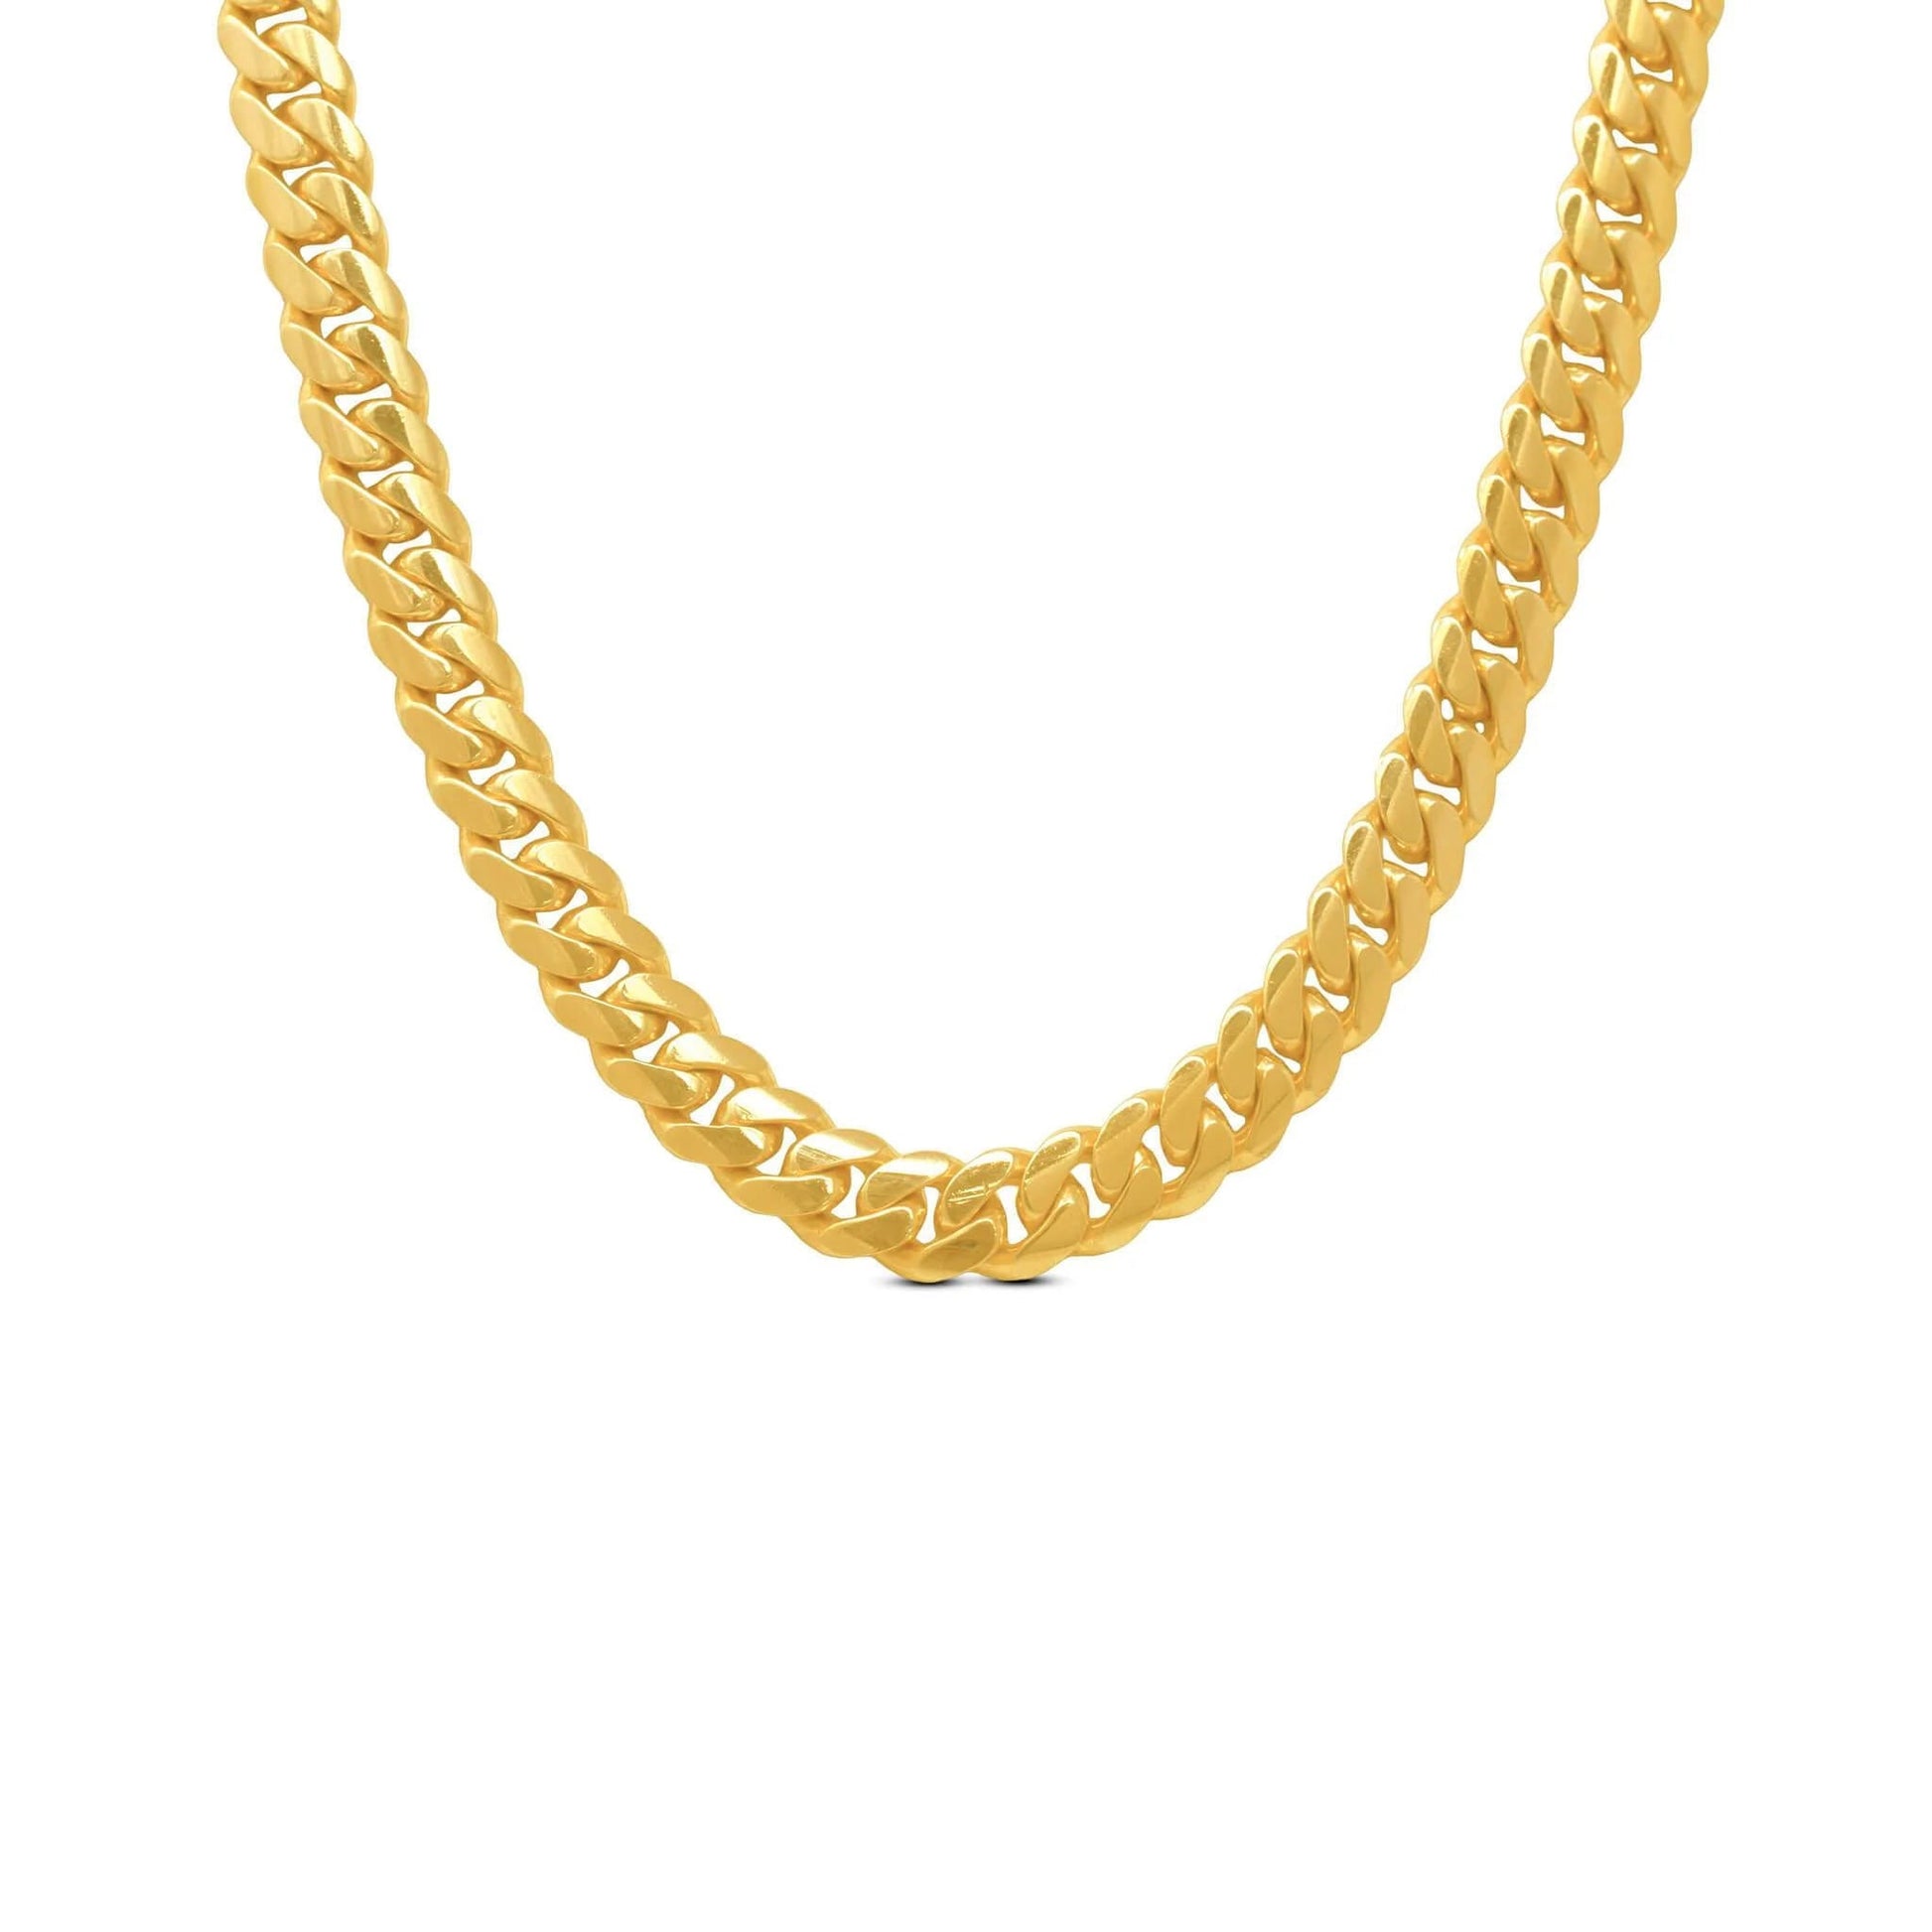 10mm Miami Cuban Link Chain in 10K Solid Yellow Gold - Vera Jewelry in Miami